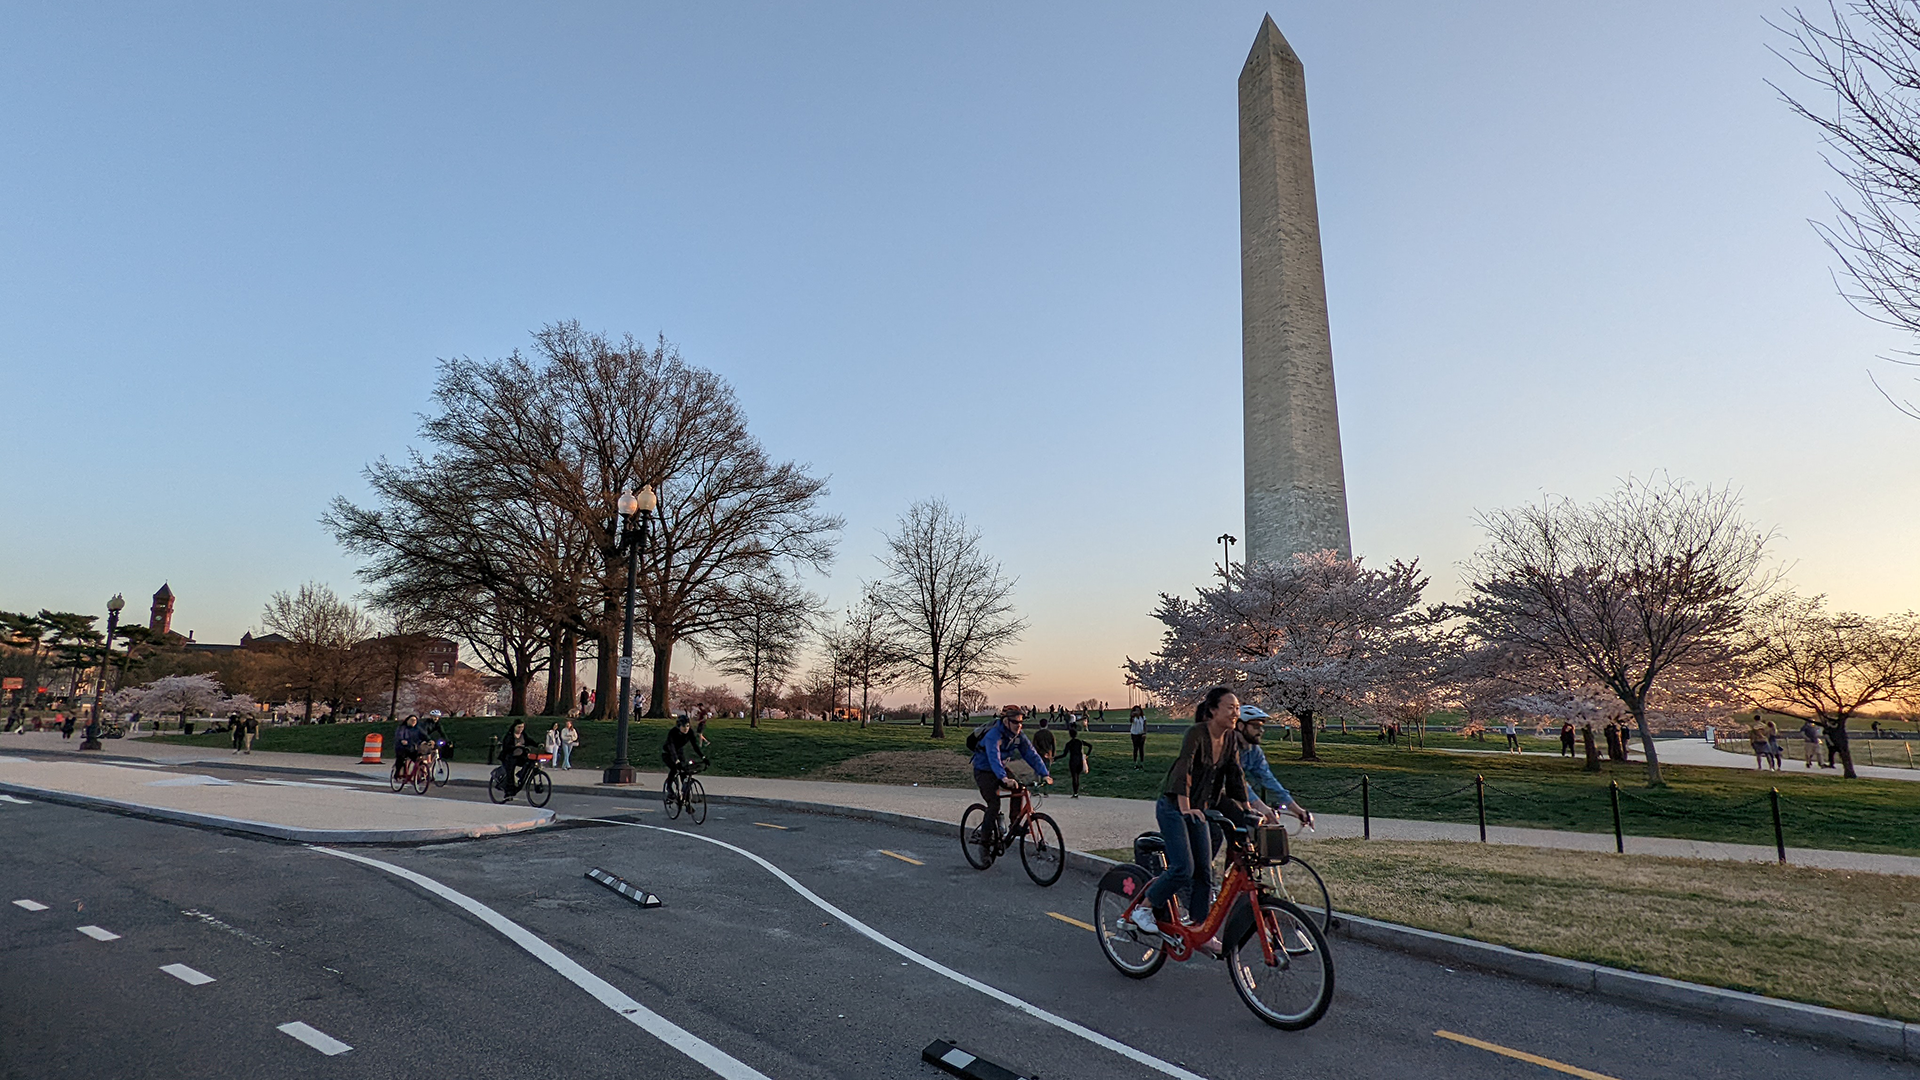 People biking and walking on bike lanes post construction on 15th street in Washington D.C.